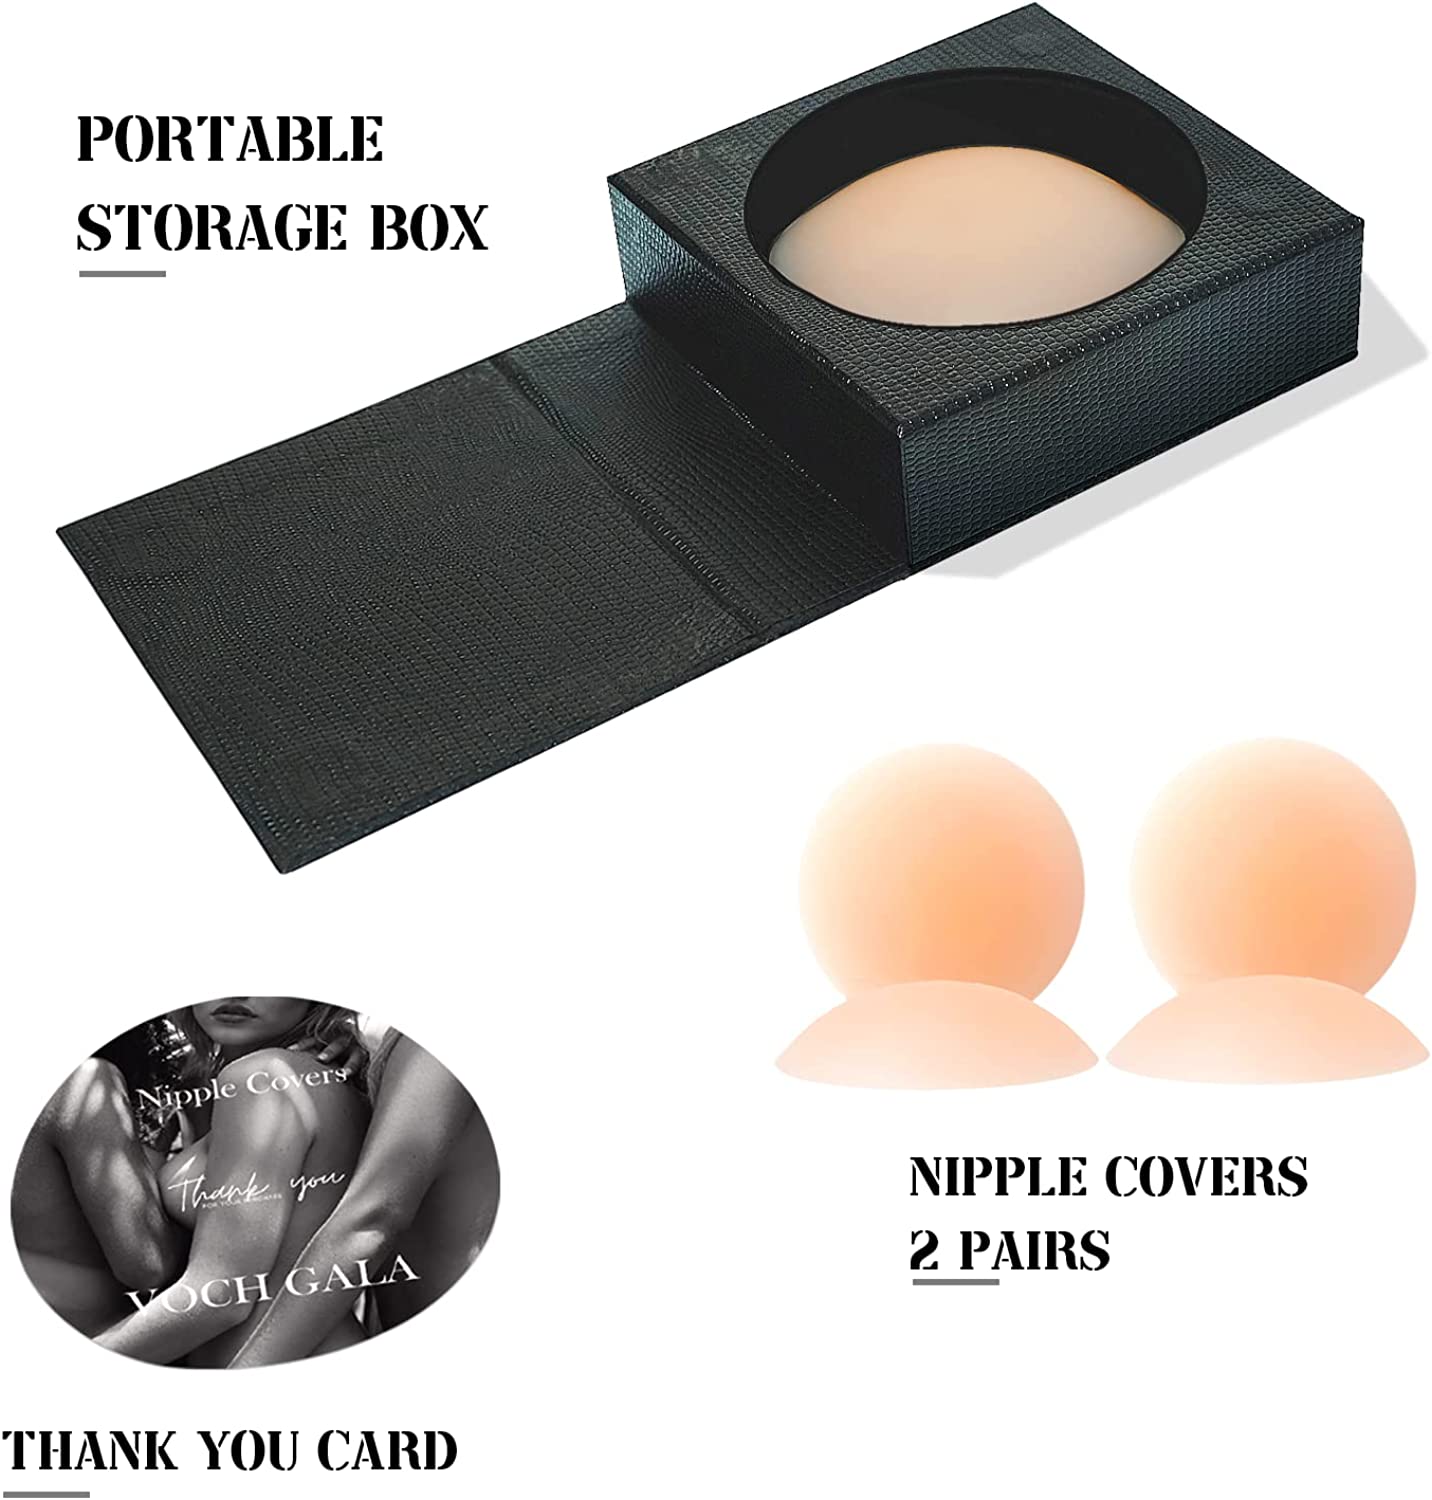 VOCH GALA Nipple Cover, 2 Pairs, Non Adhesive Nipple Pasties, Thin Edg